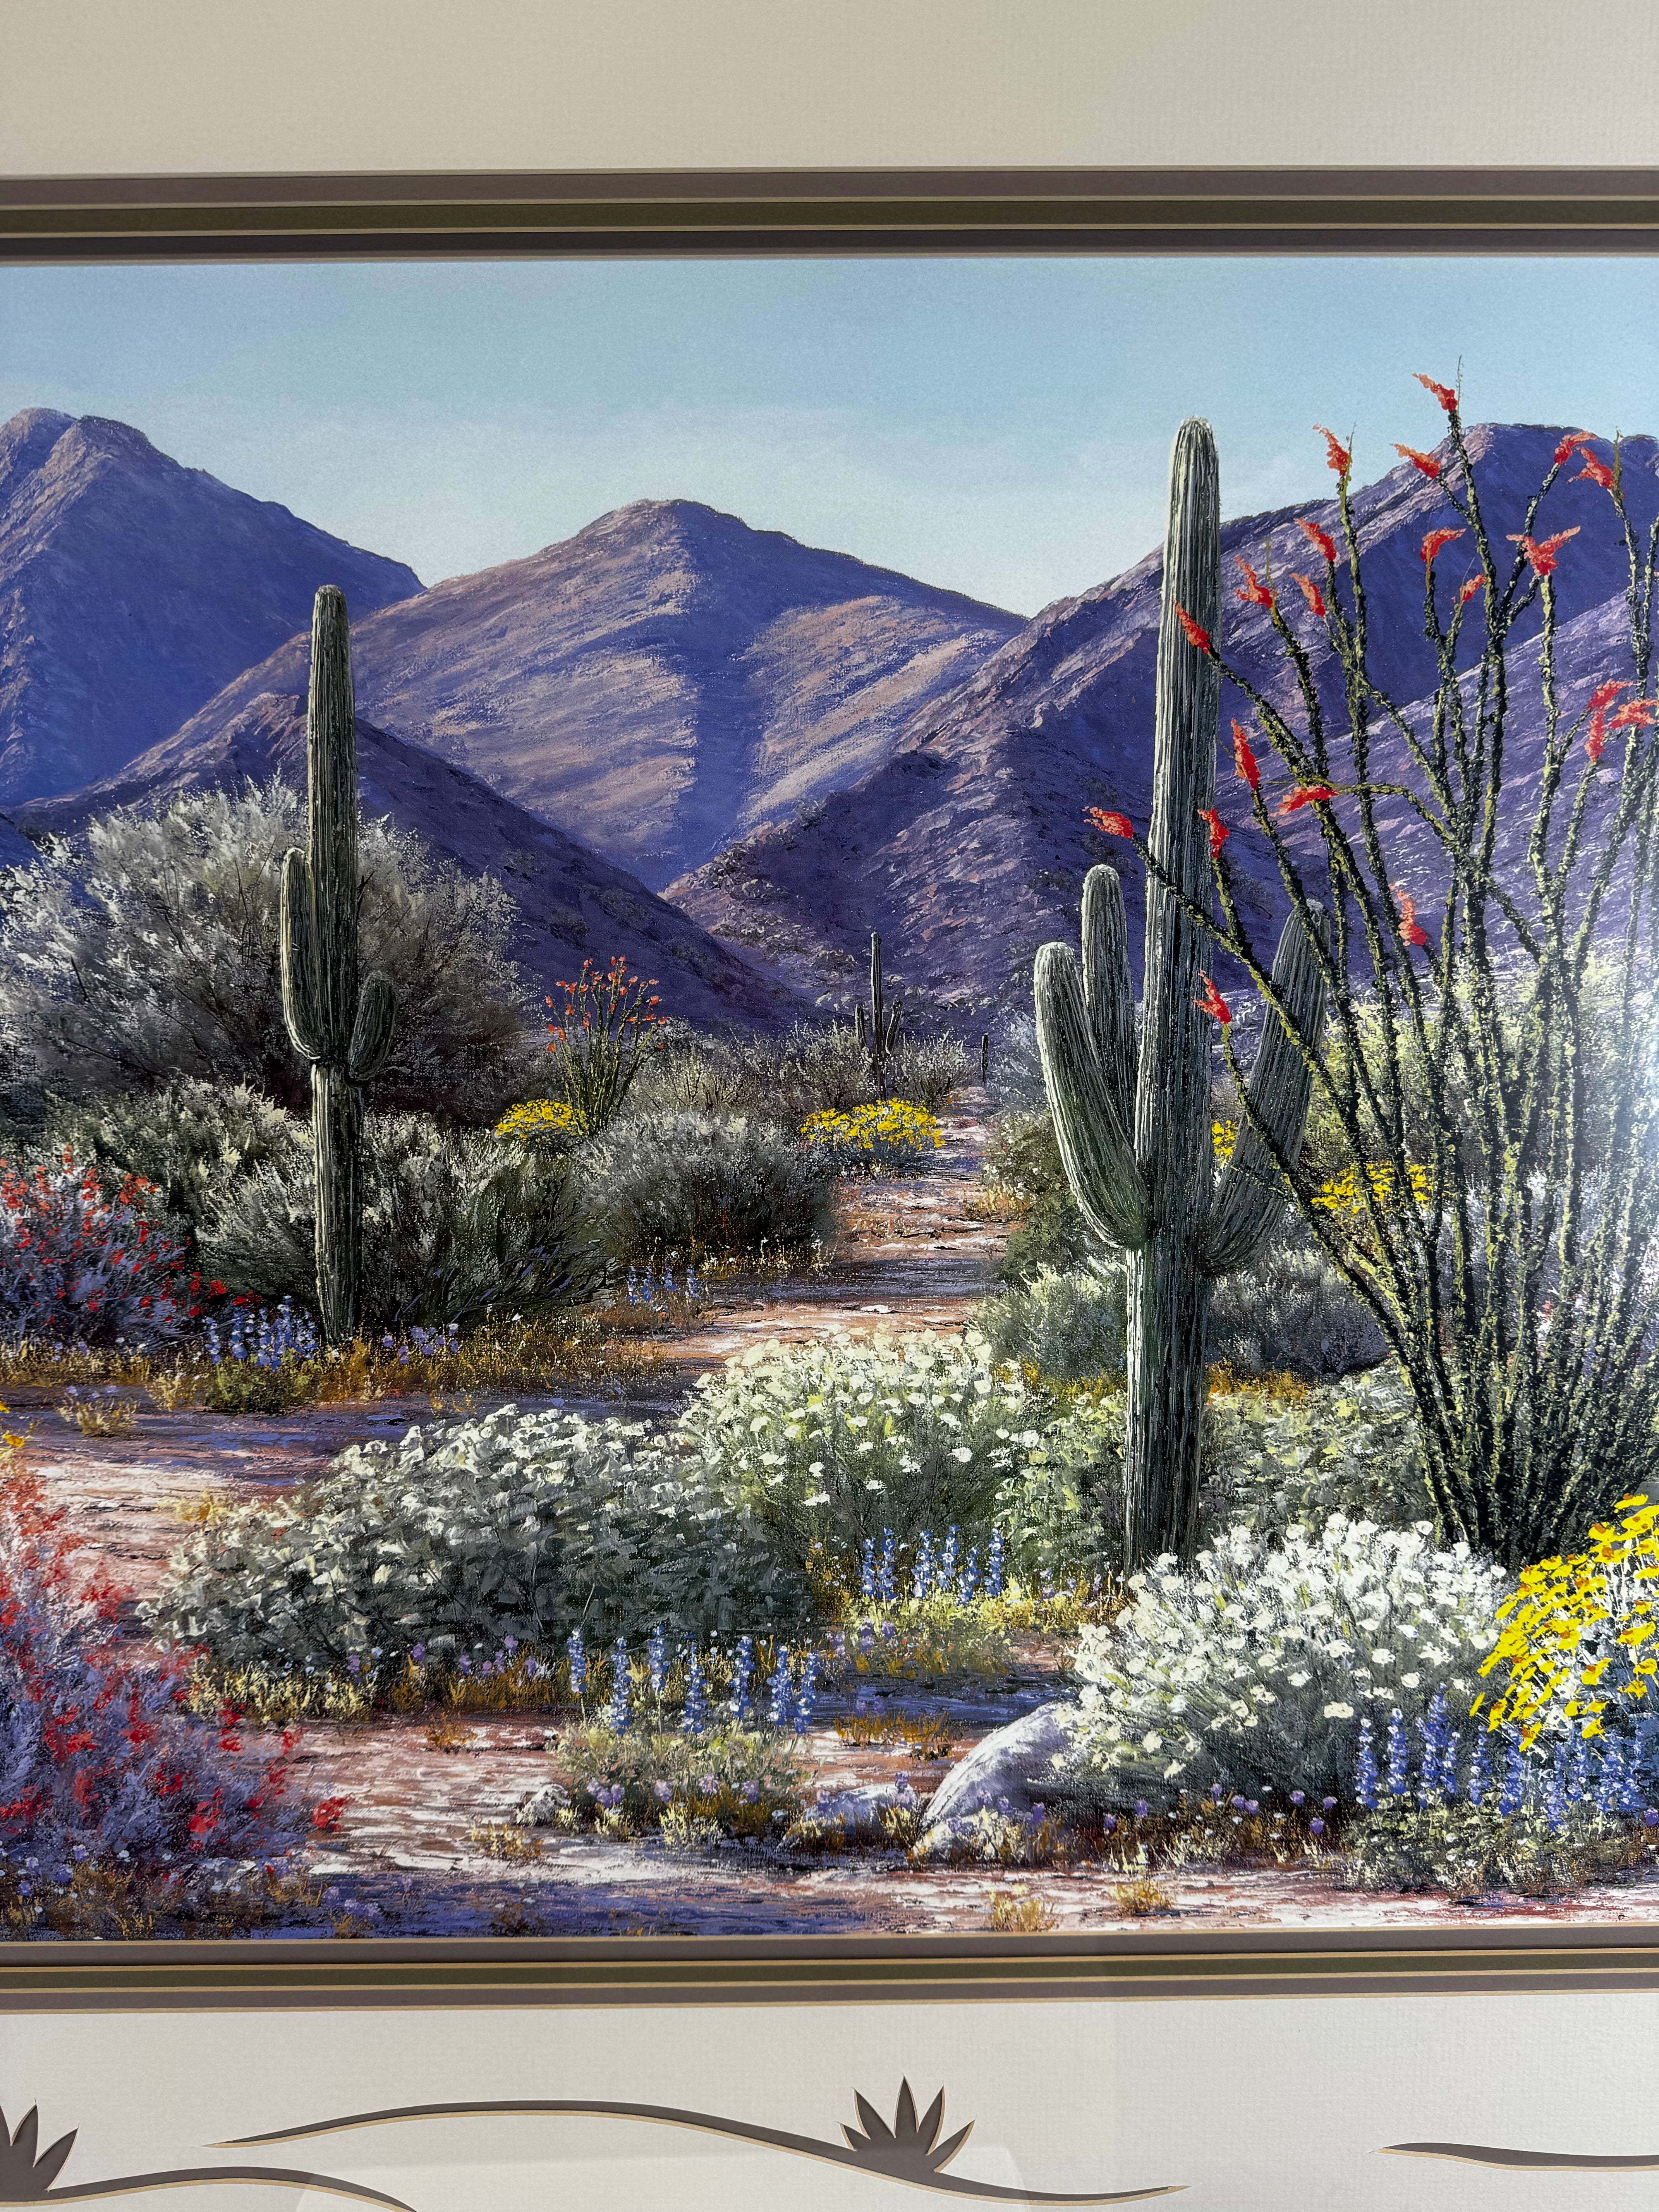 Desert Landscape By Linda Lea Acrylic on Paper Desert Cactus Matted Print